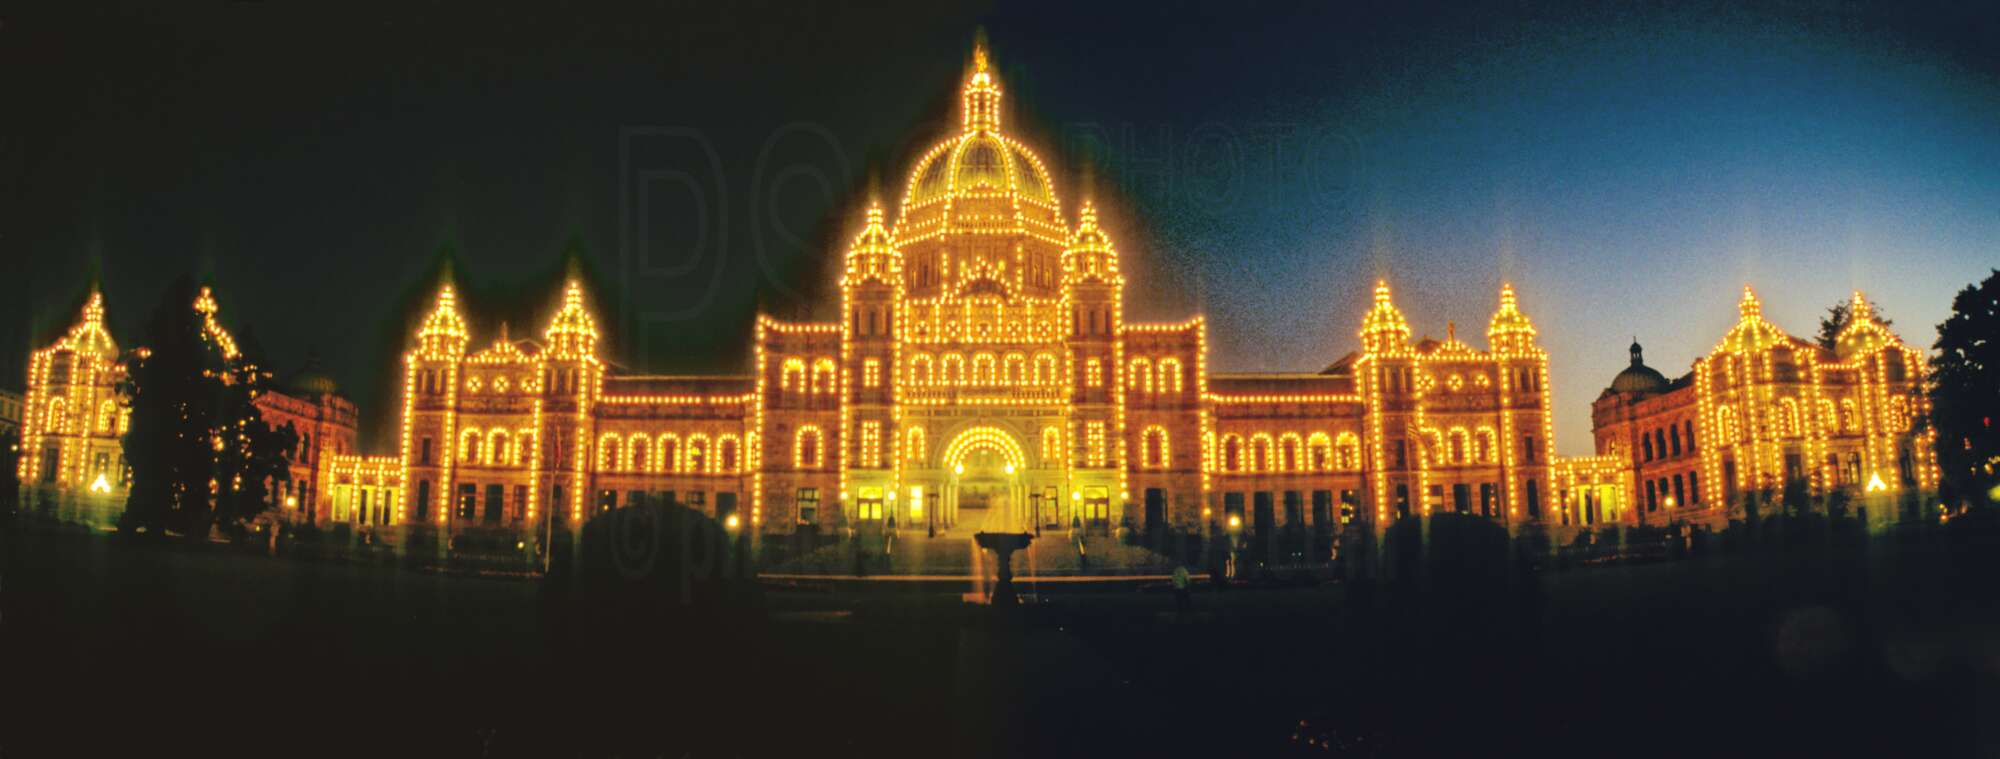 Parliament Buildings at Night